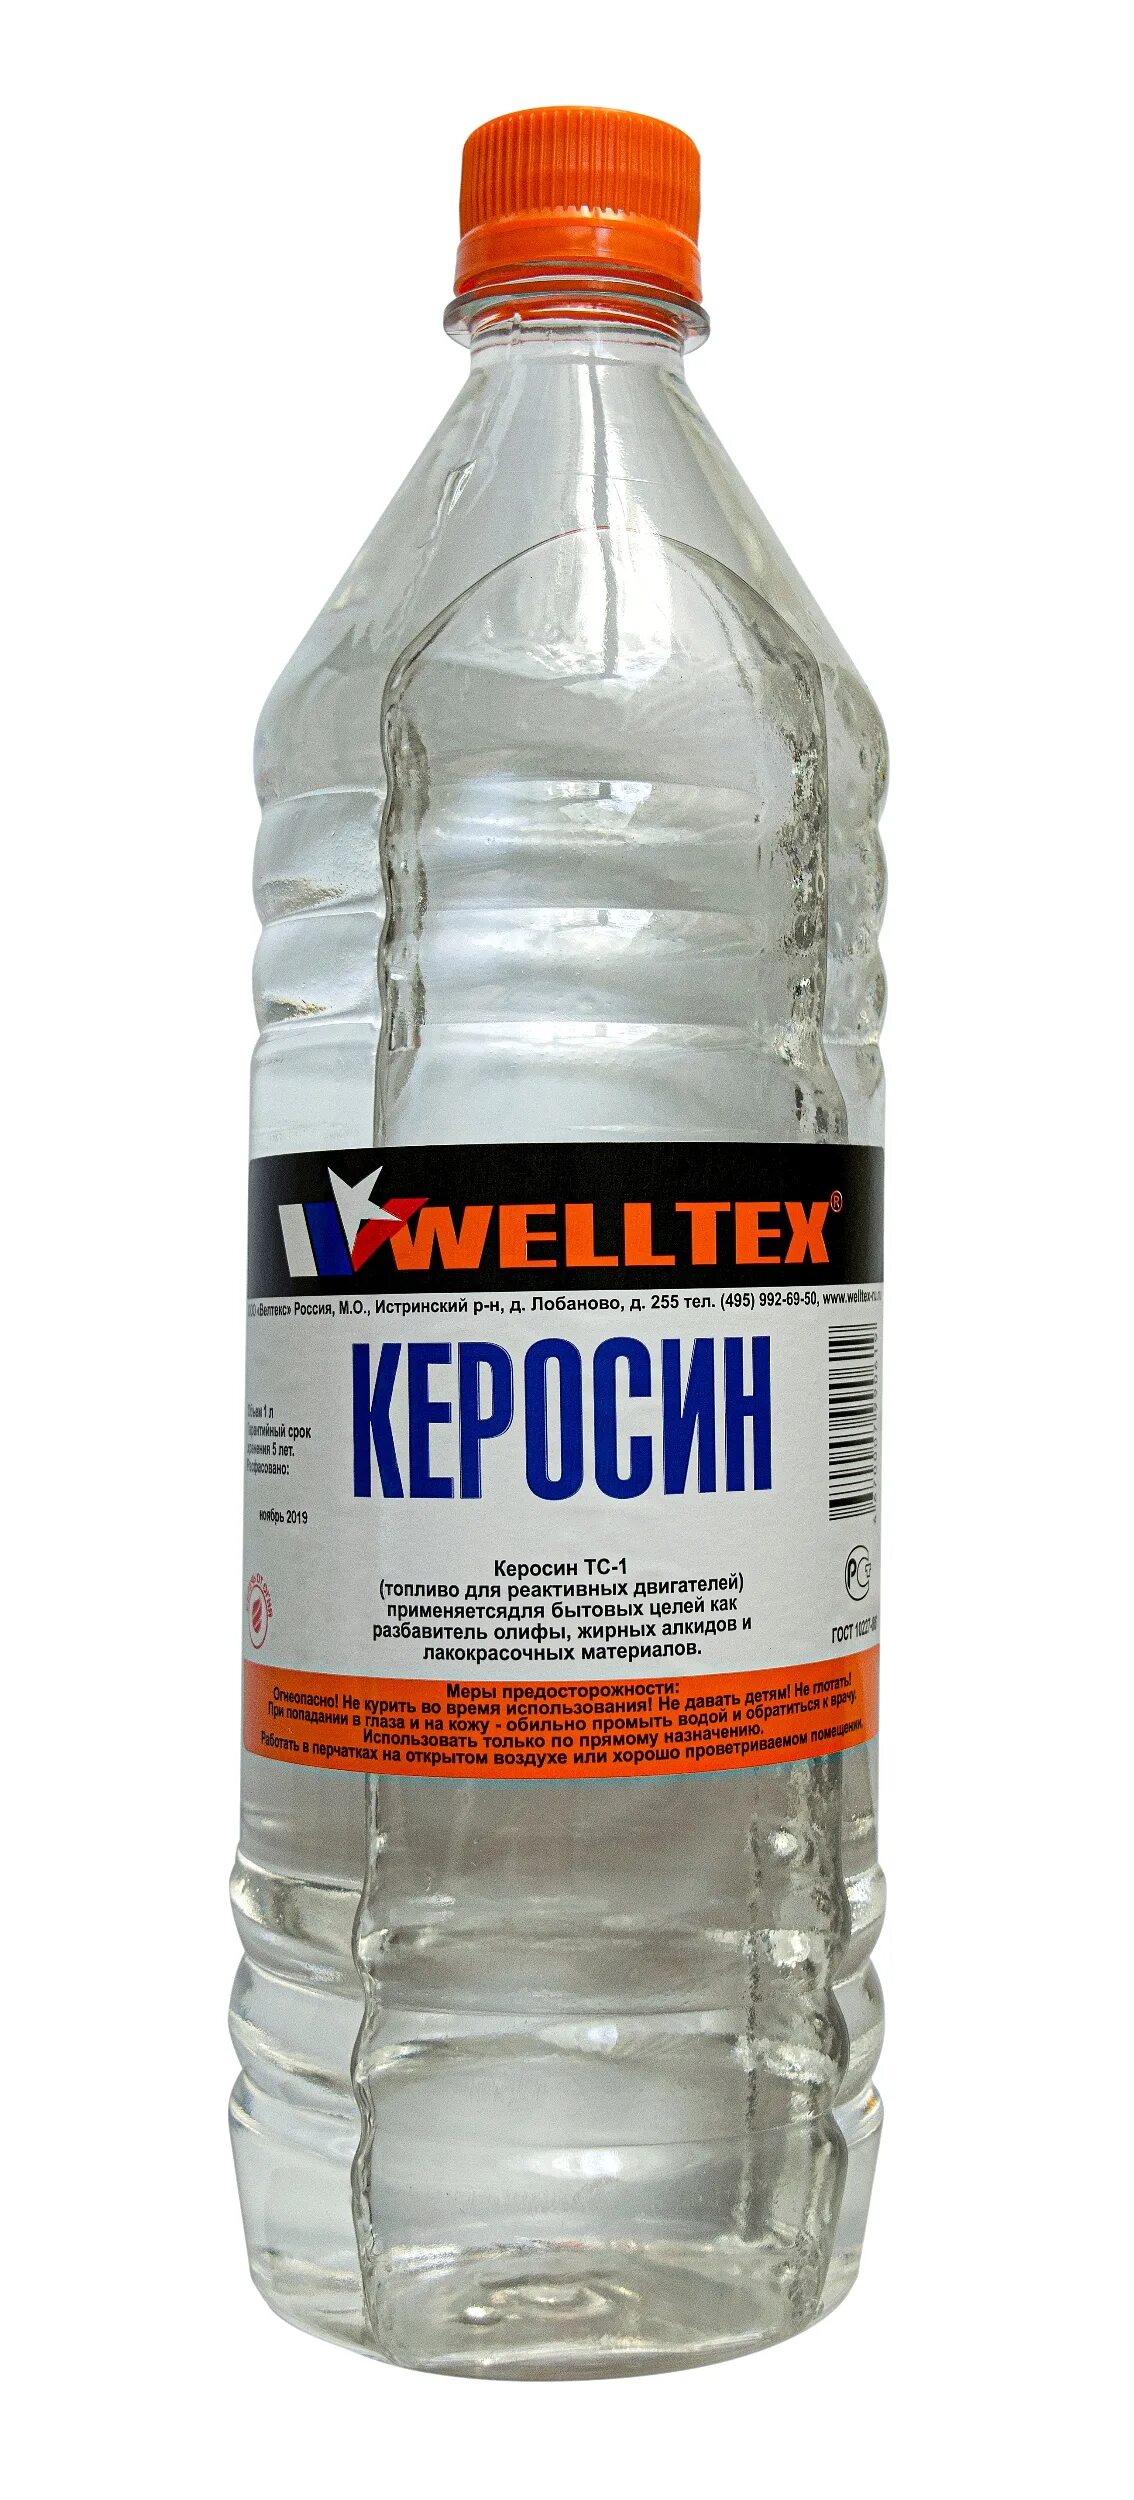 Welltex керосин (1л.). Керосин 1л Welltex Welltex 4670007990619. Сольвент Welltex нефтяной 1 л. Керосин ТС-1 ГОСТ. Керосин д